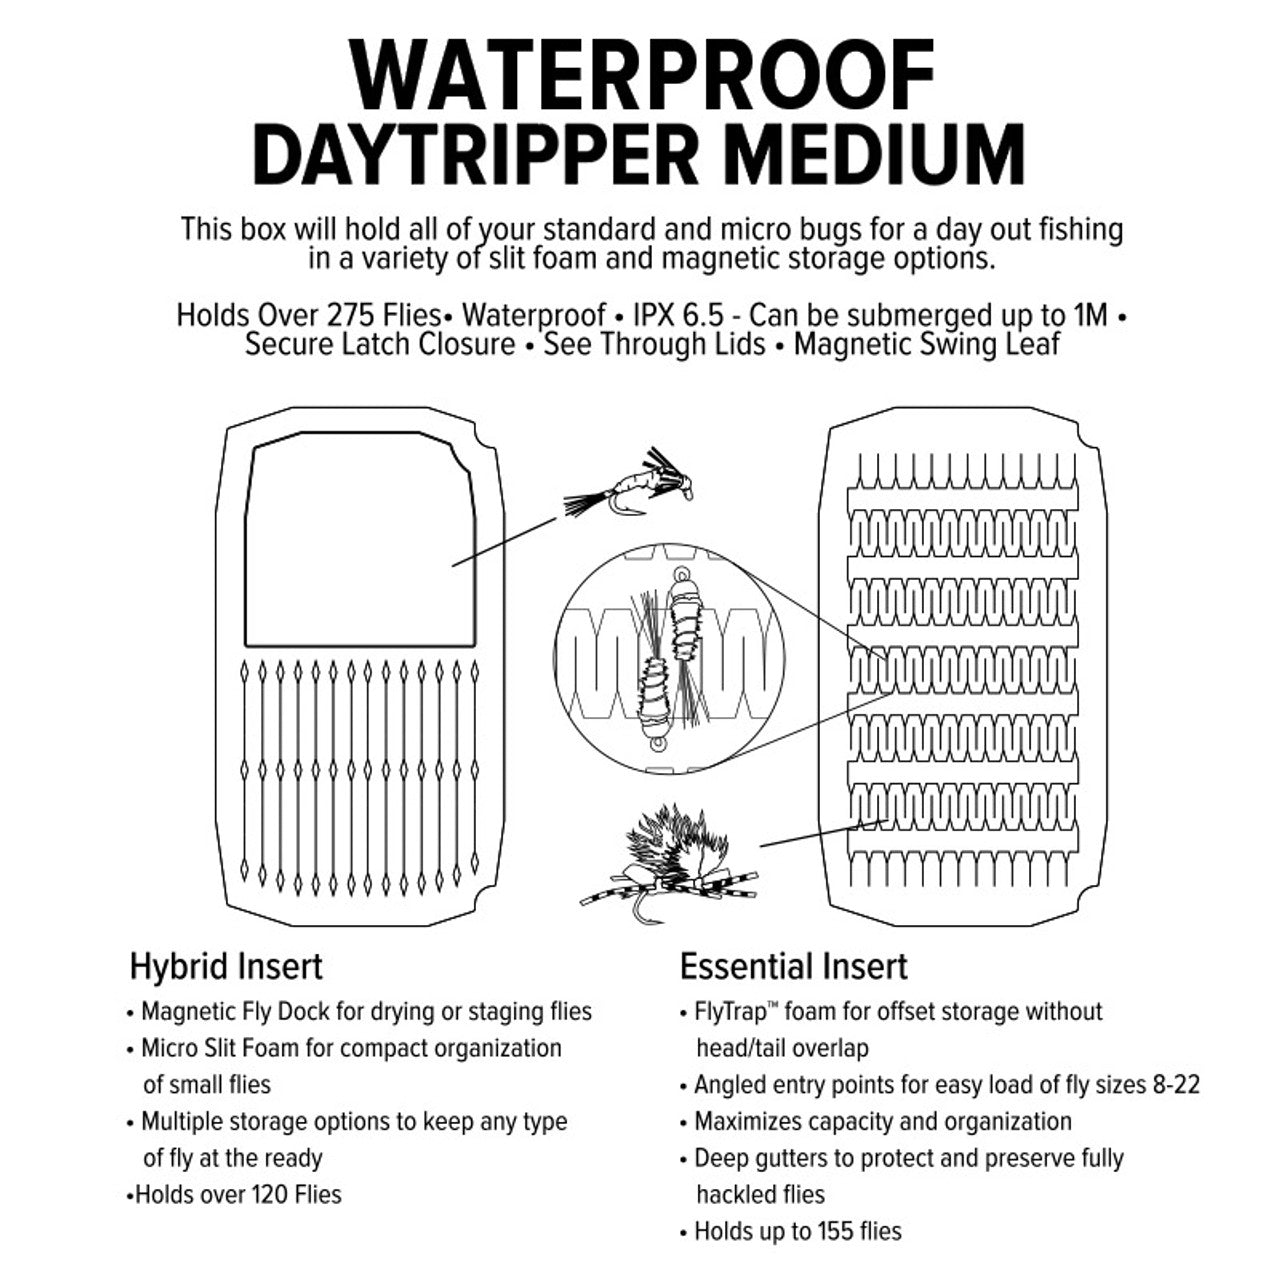 Umpqua Daytripper Waterproof Medium Fly Box